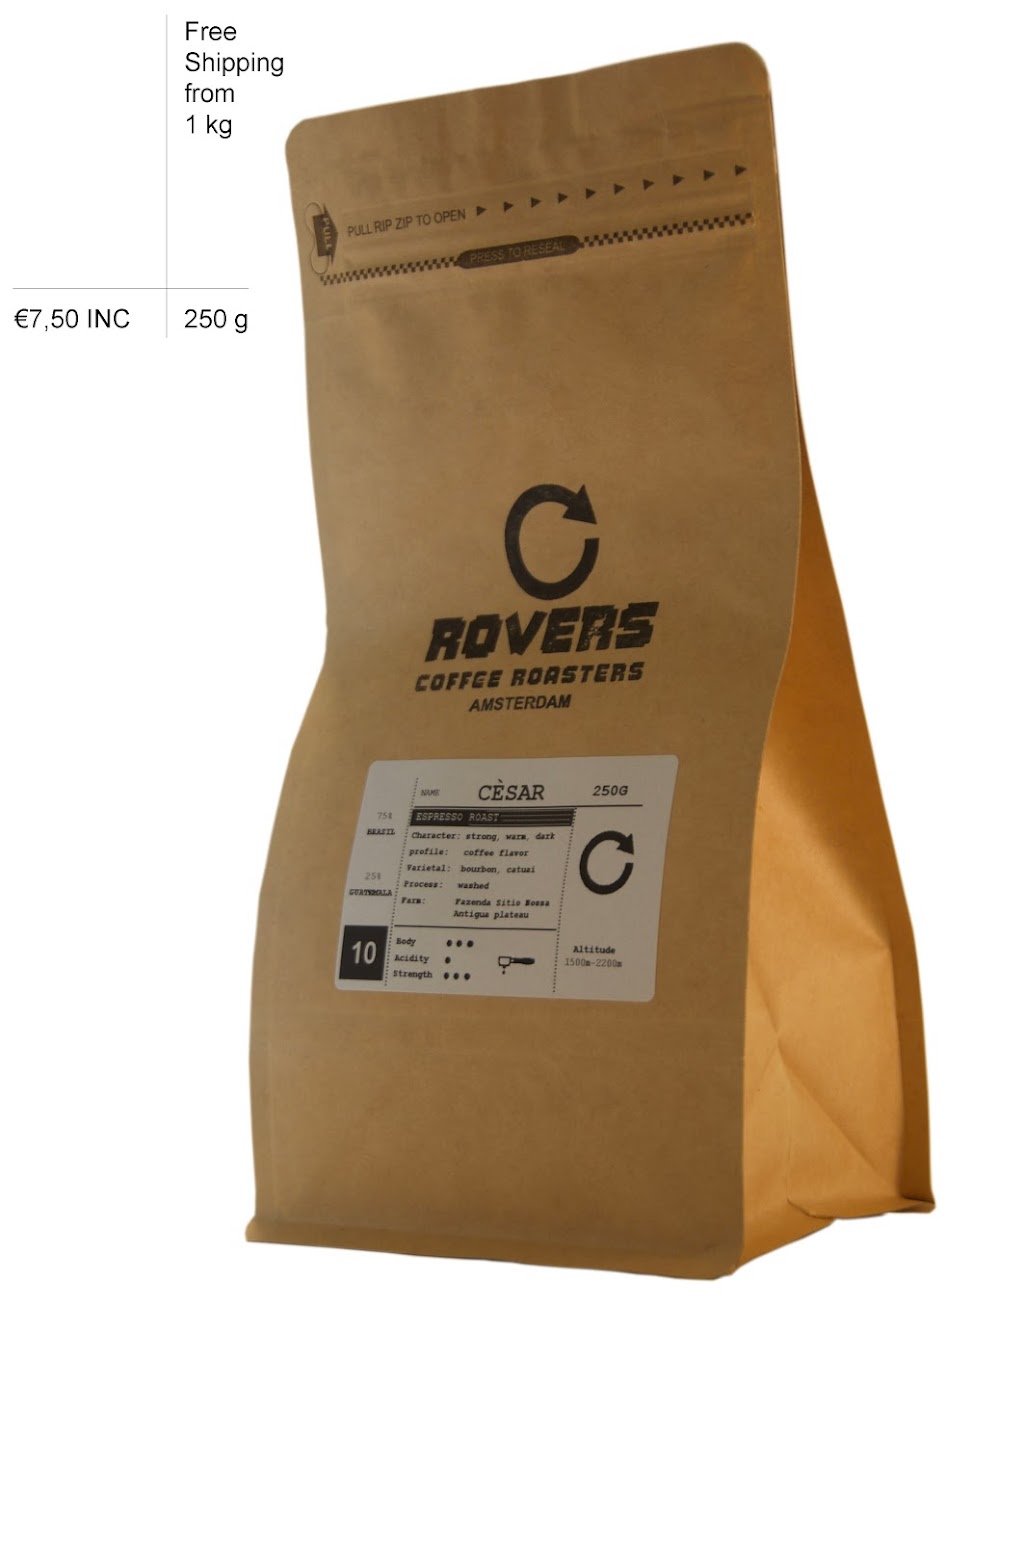 Rovers Coffee Roasters | Veemarkt 44 A, 1019 DD Amsterdam, Netherlands | Phone: 06 14577467